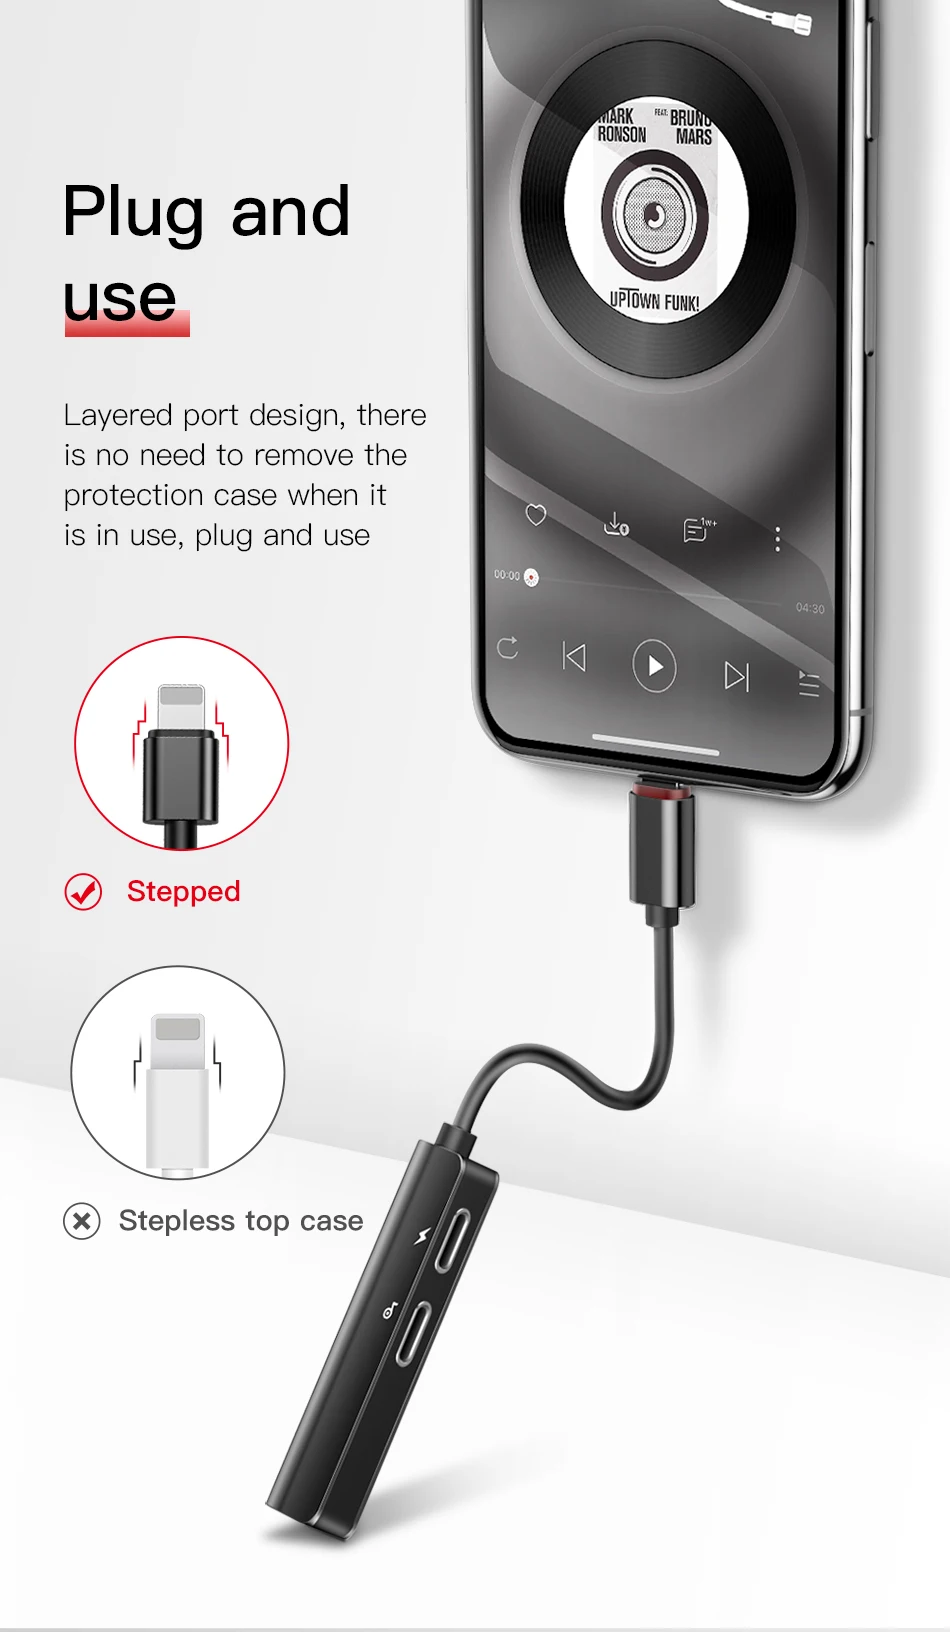 Baseus аудио Aux адаптер для iPhone 11 Xs Max Xr X 8Plus двойной разъем для наушников OTG кабель для Lightning сплиттер конвертер